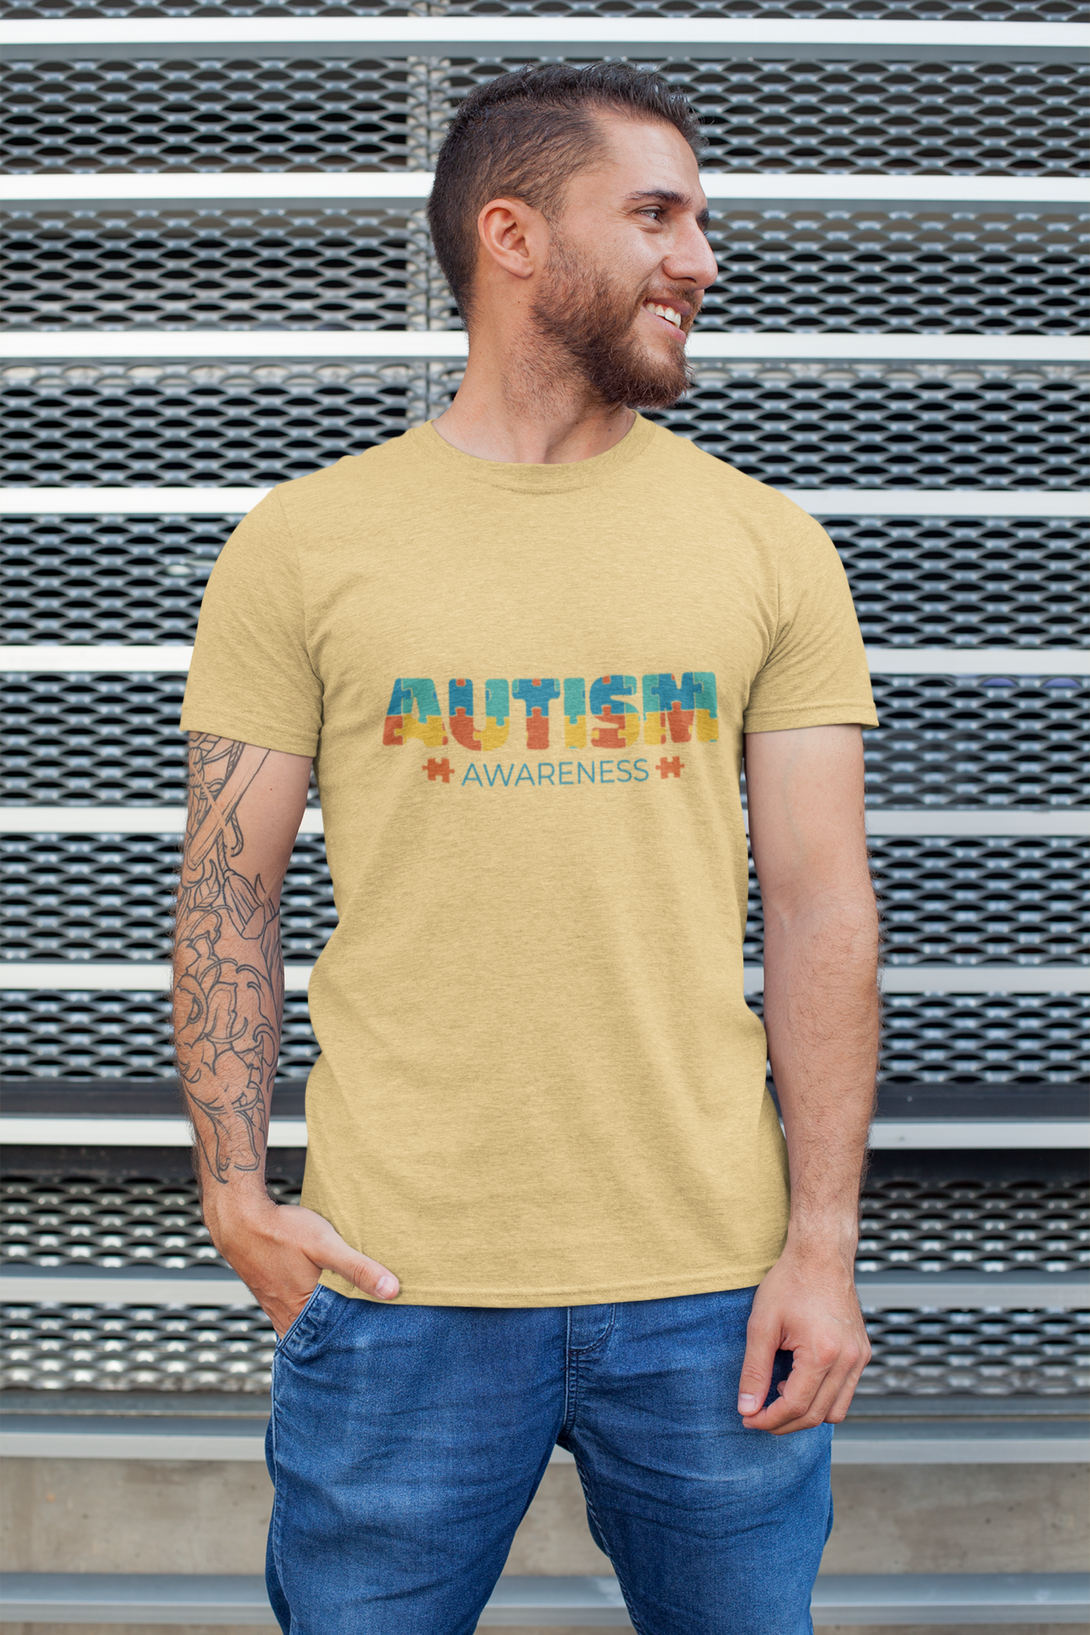 Autism Awareness Printed T-Shirt For Men - WowWaves - 5